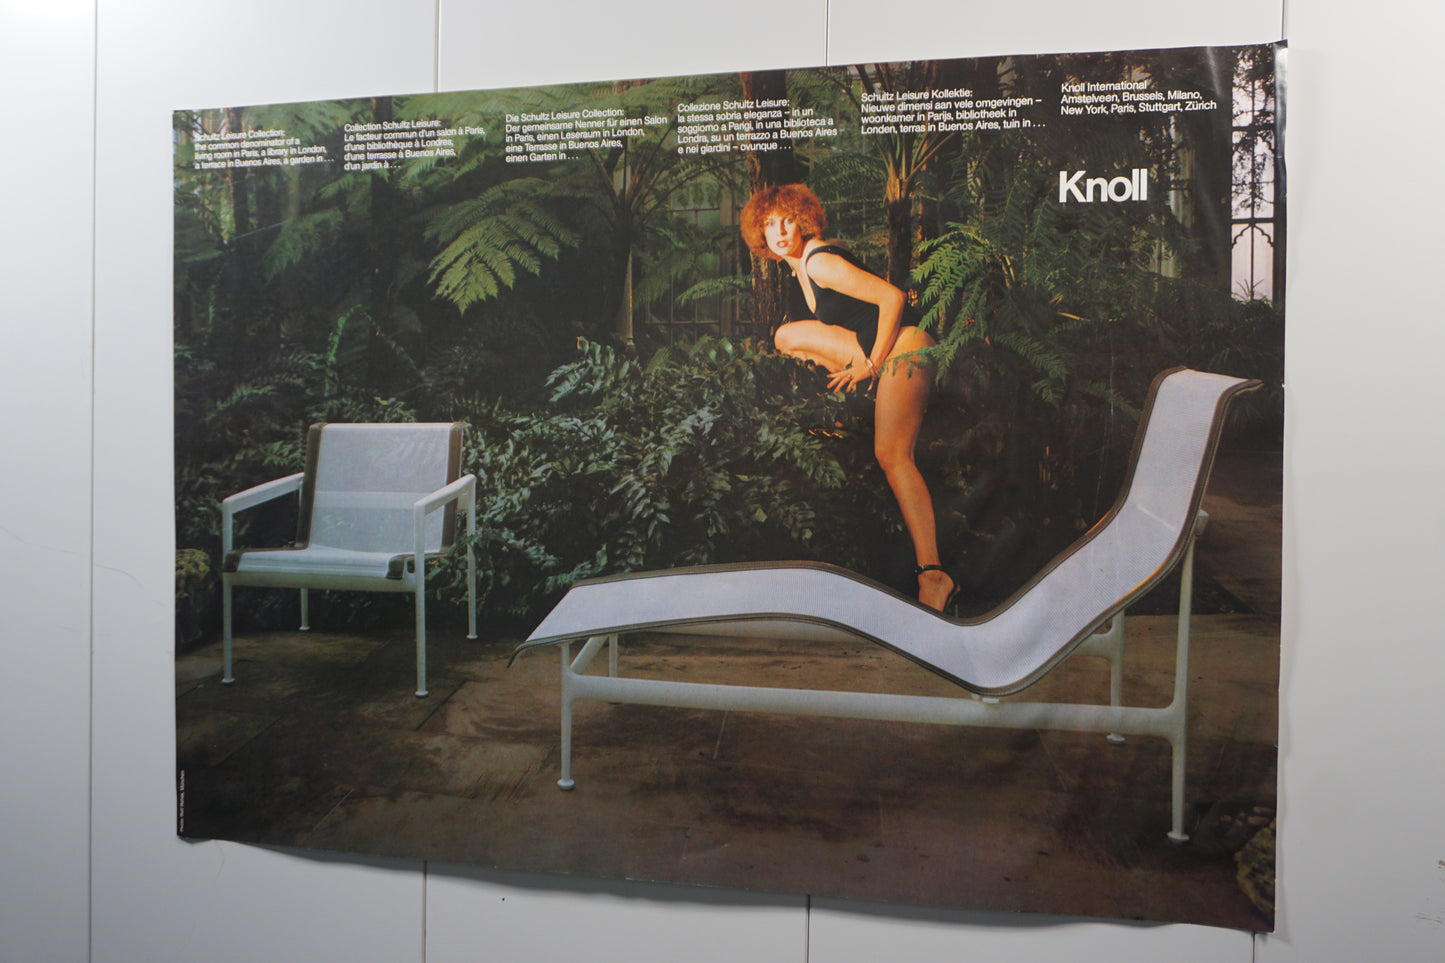 Knoll Schulltz Leisure Collection Poster